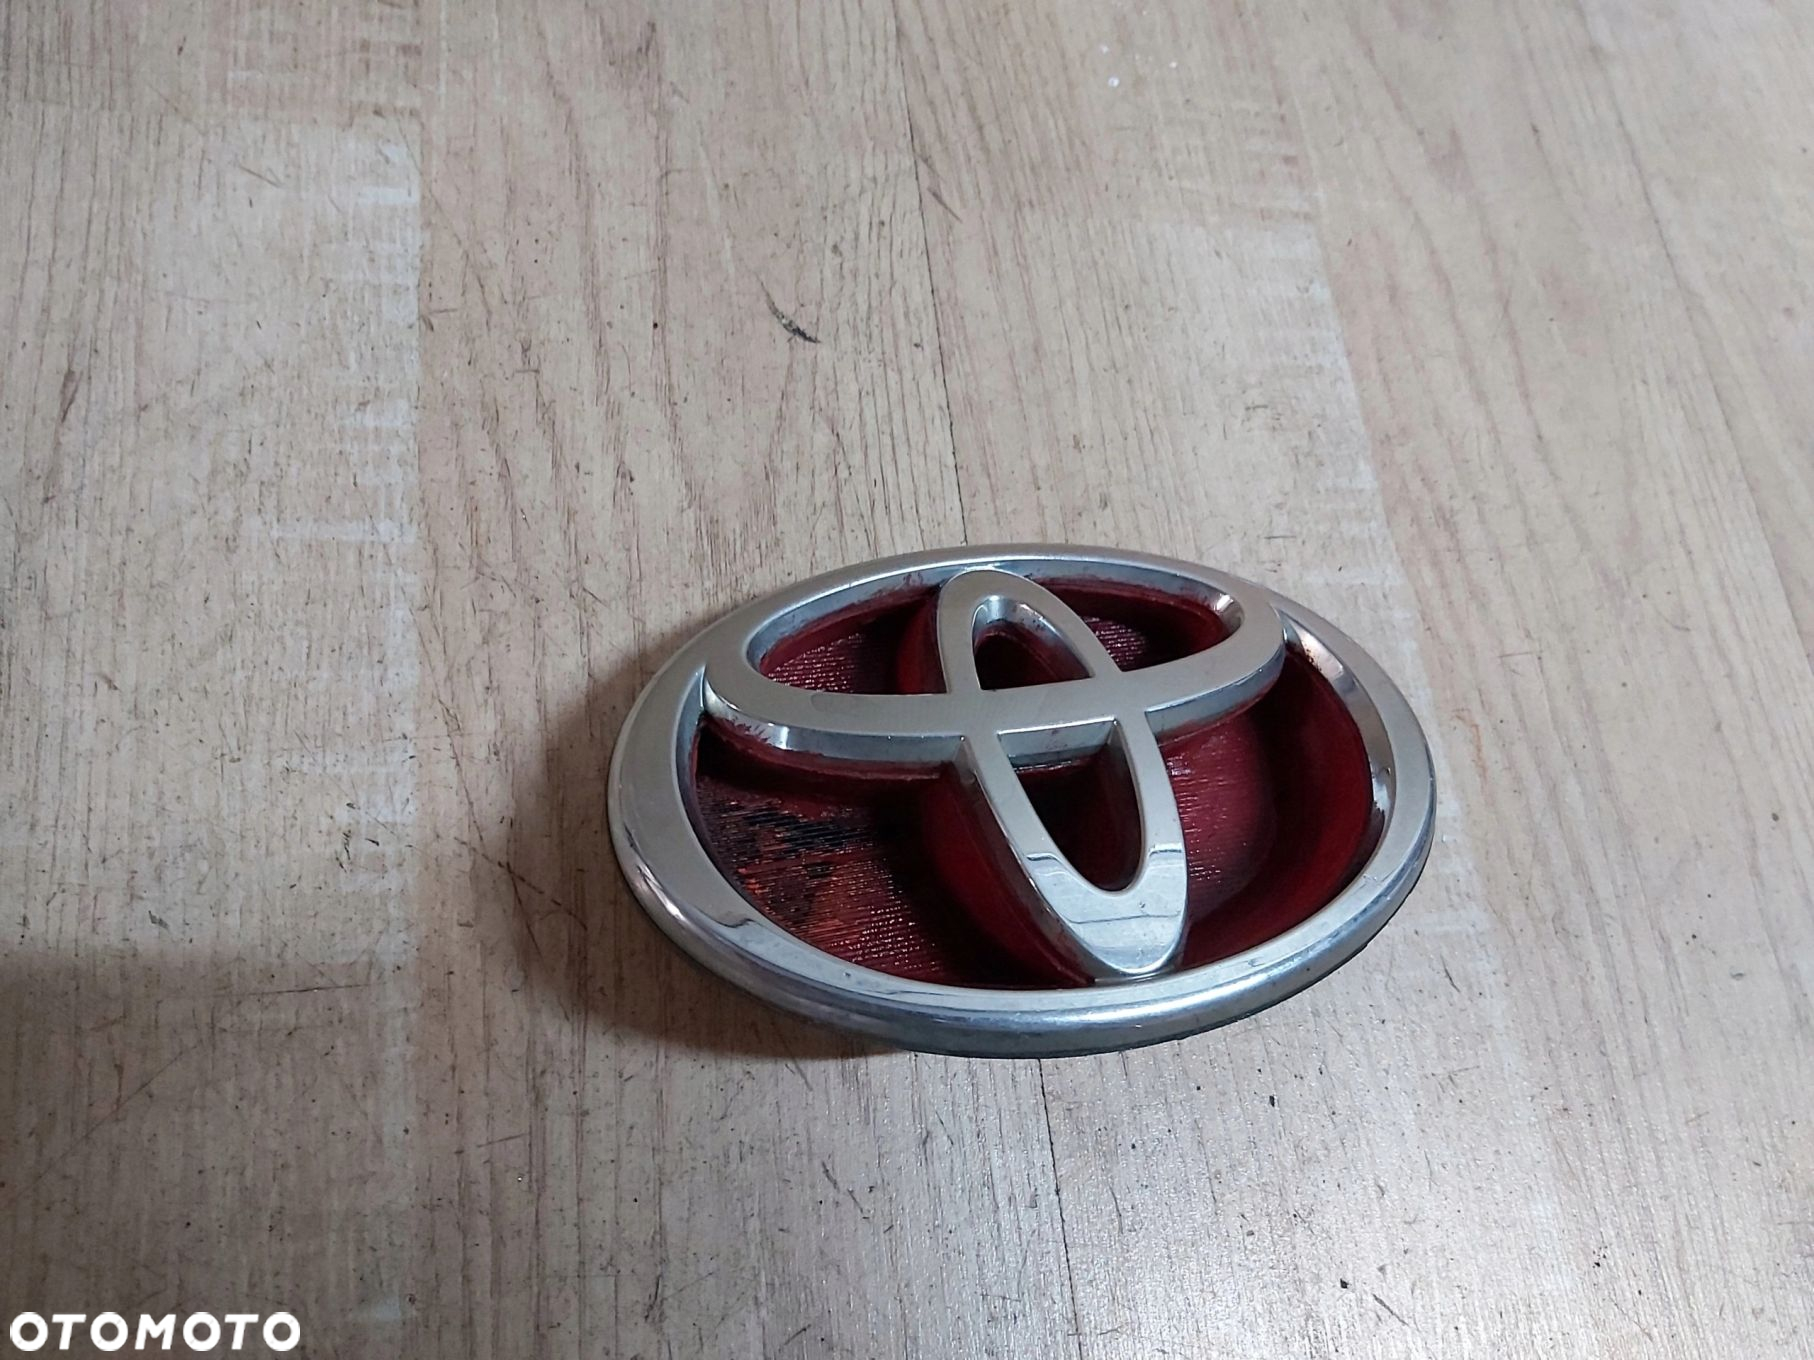 Toyota Corolla E12 1,8 TS znaczek emblemat przód logo 75311-02130 - 2